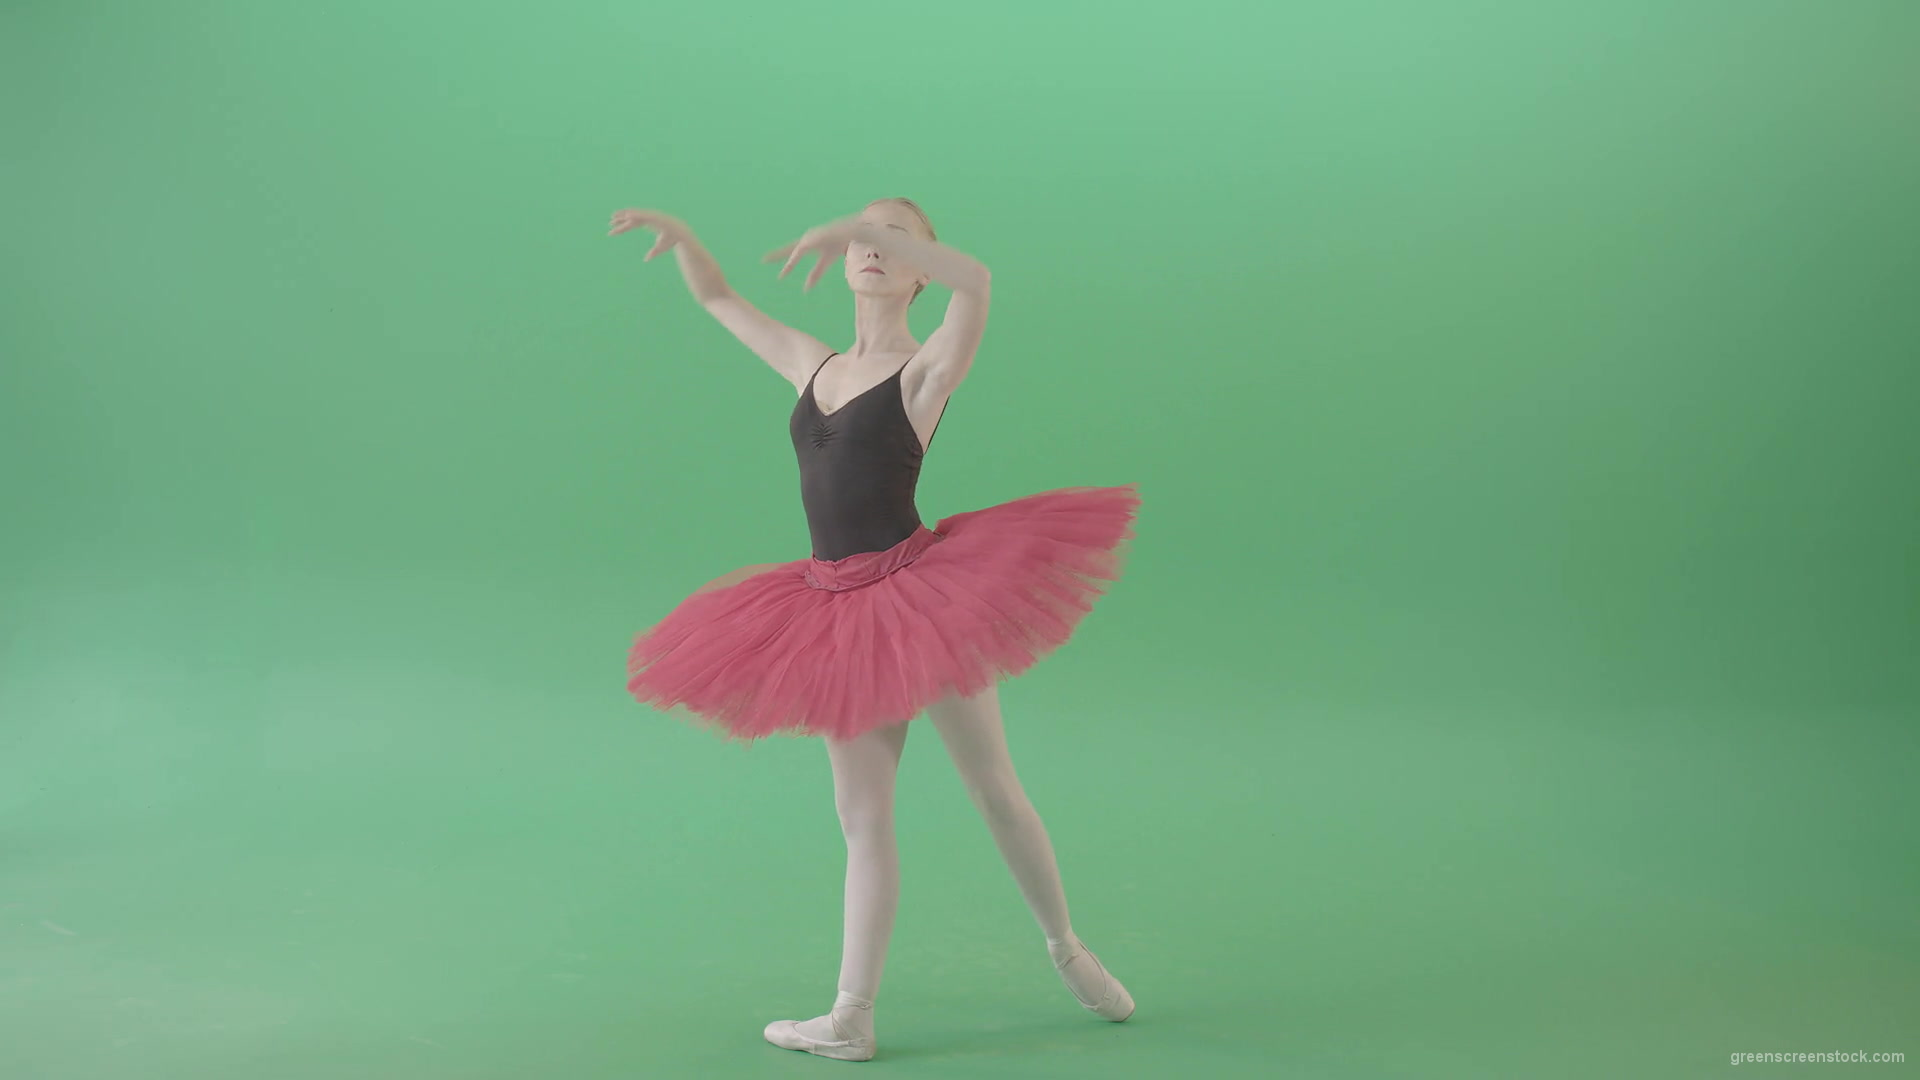 Elegant-elite-moves-by-ballet-dancing-blonde-girl-on-green-screen-4K-Video-Footage-1920_008 Green Screen Stock